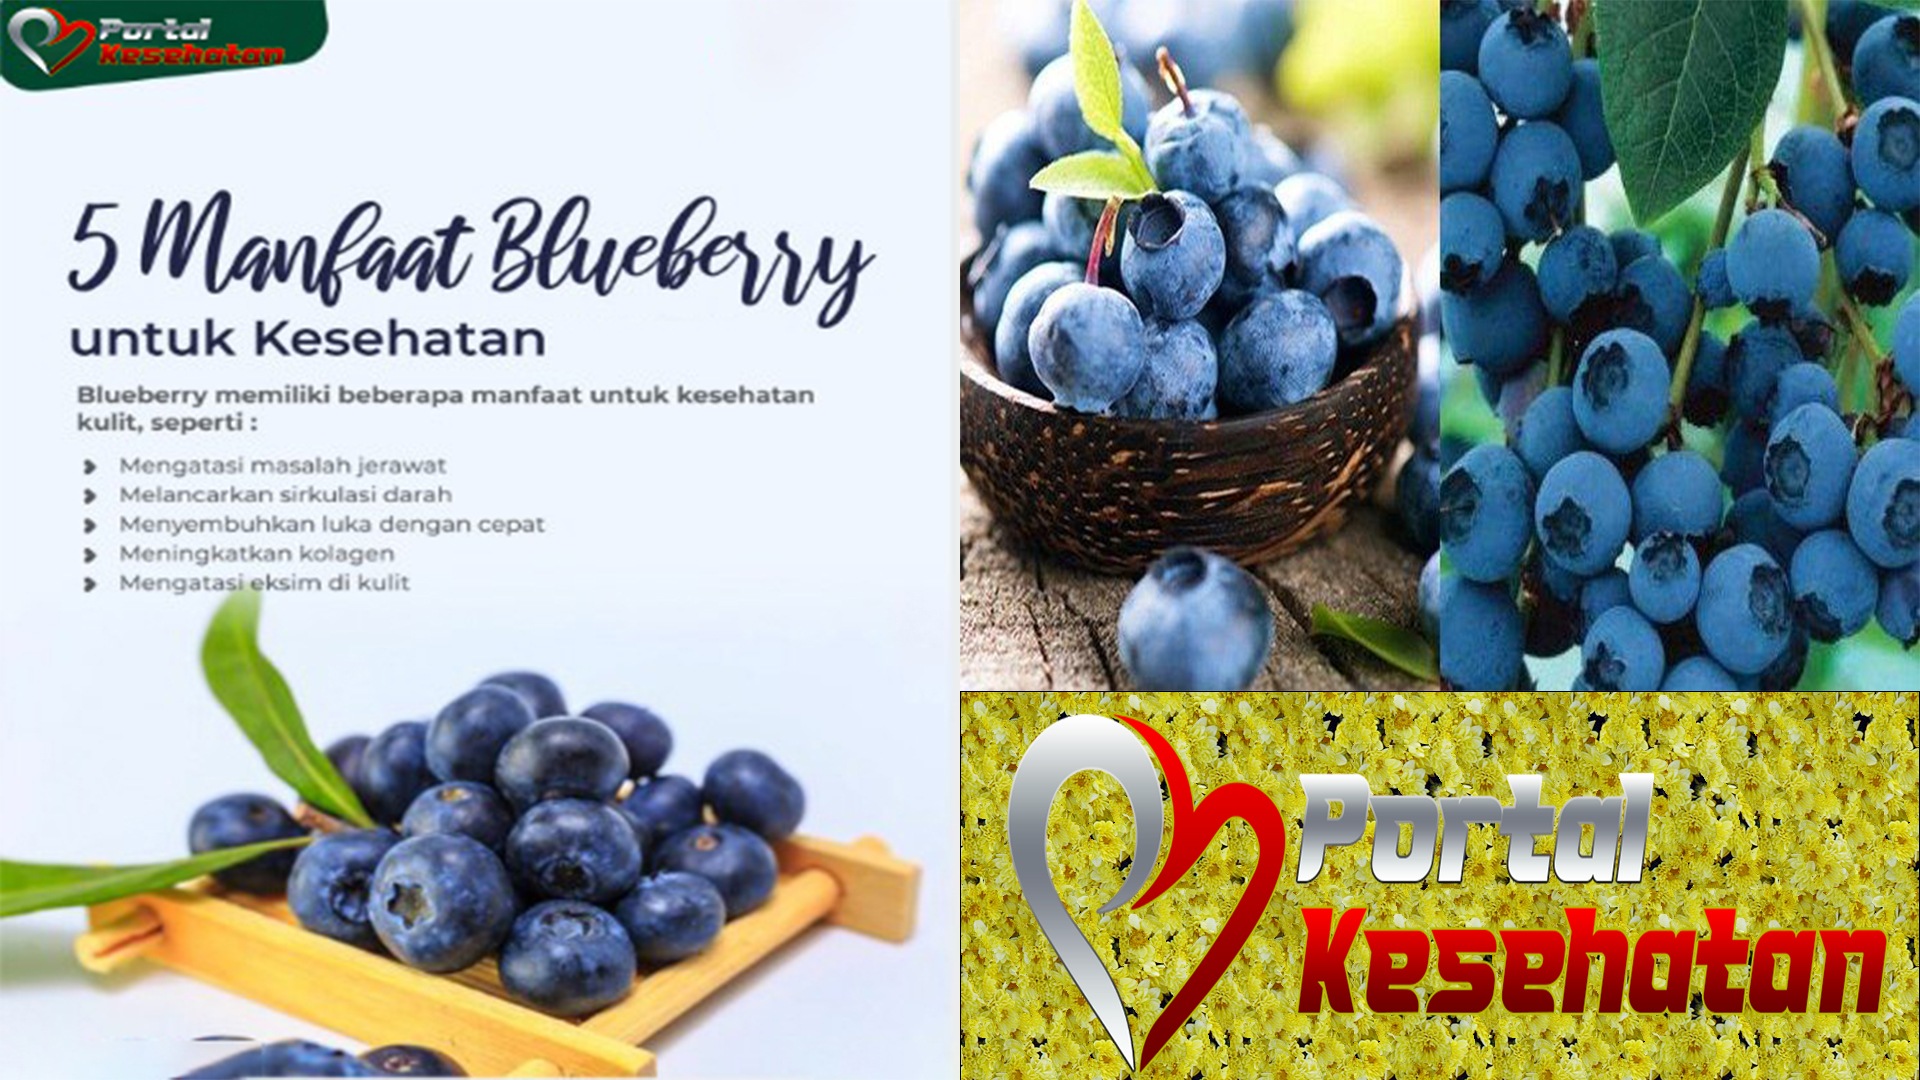 Manfaat Blueberry untuk Kesehatan